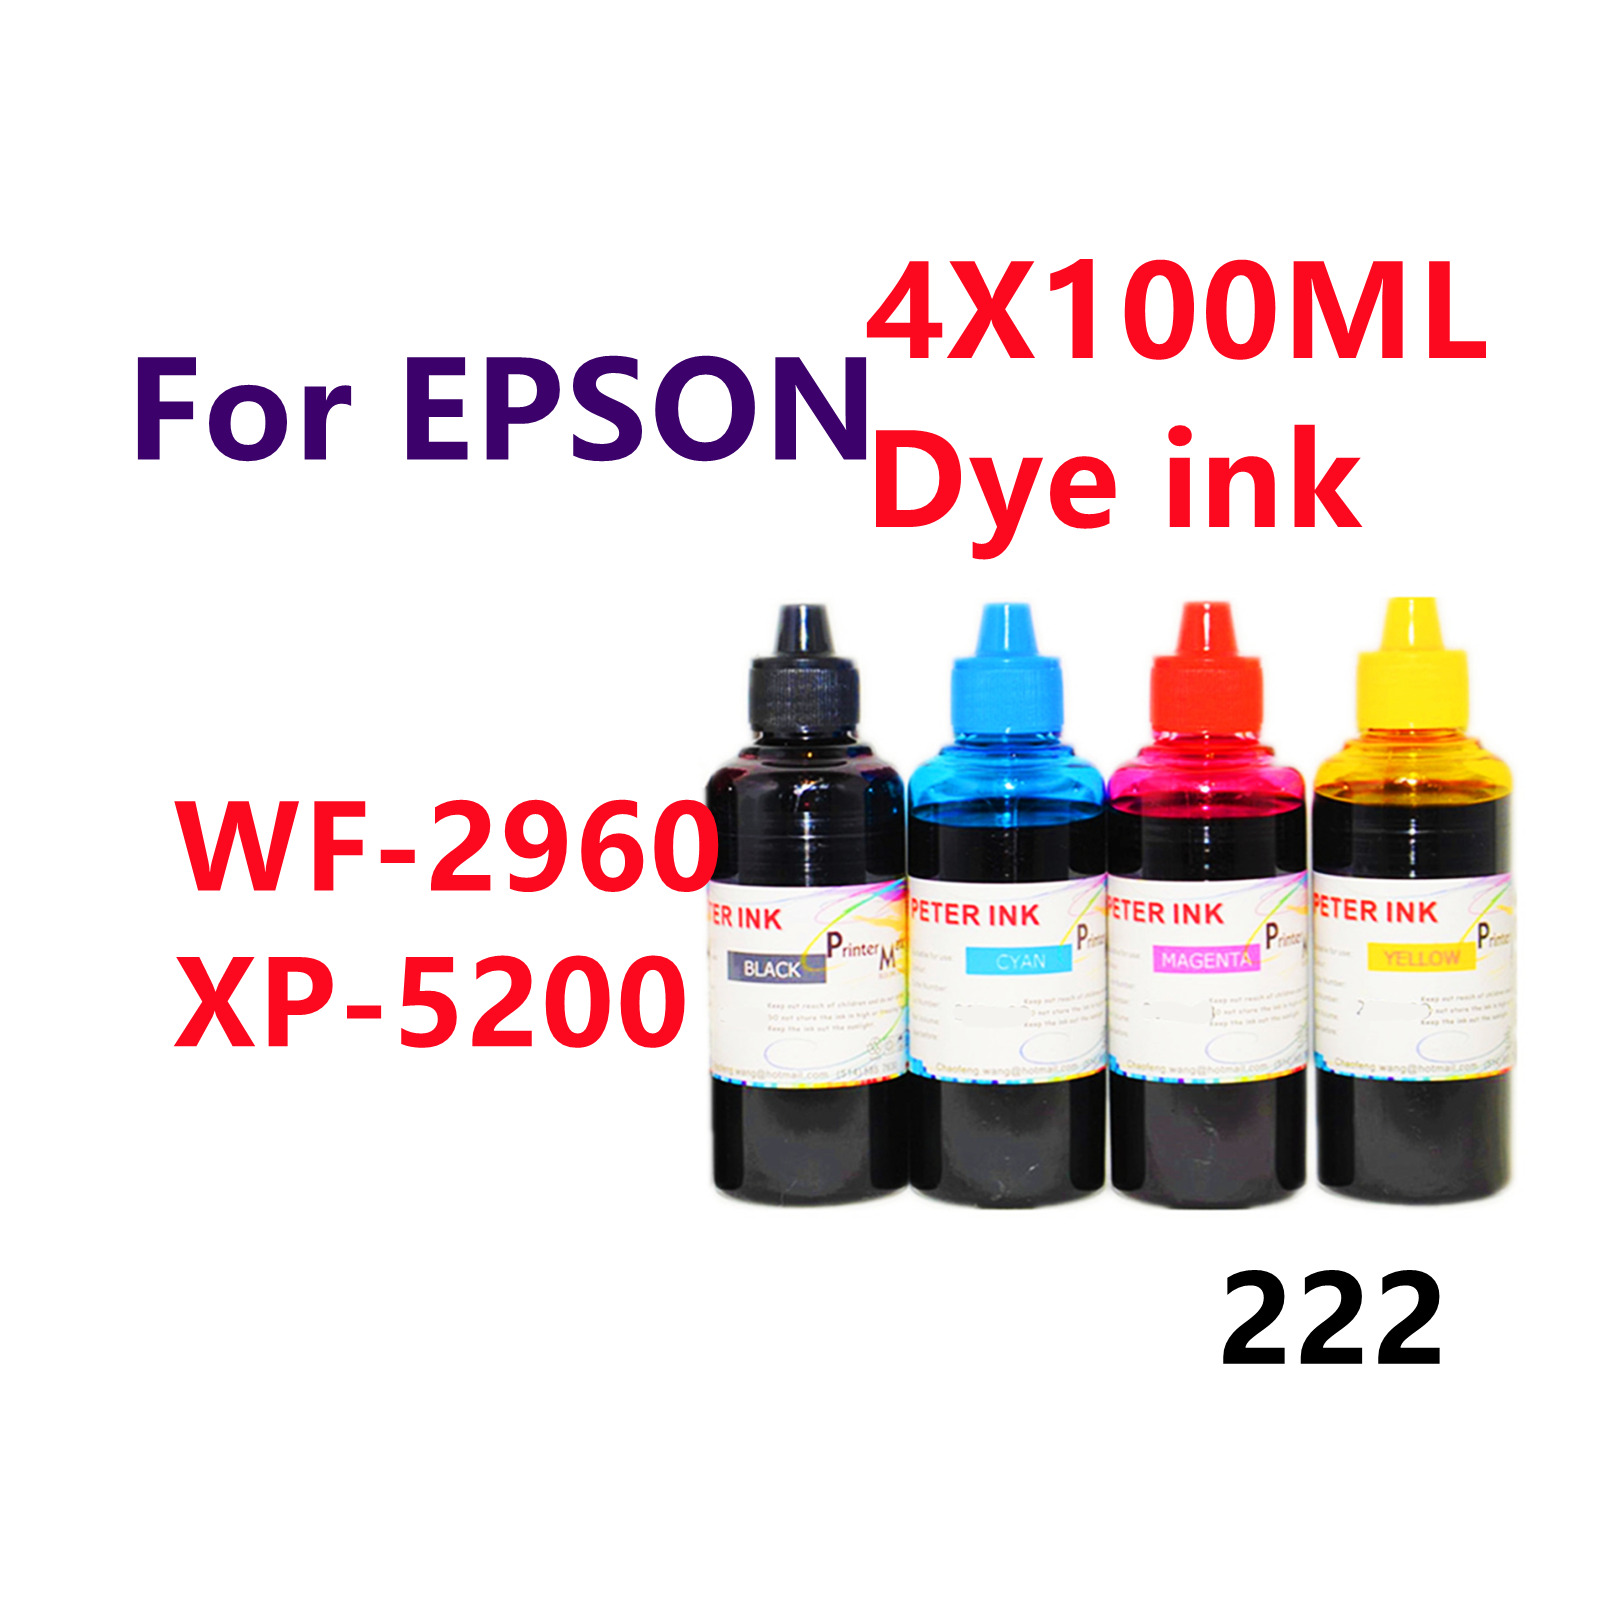 4X100ML Premium Dye Ink refills for WF2960 XP5200 T222 222 cartridge